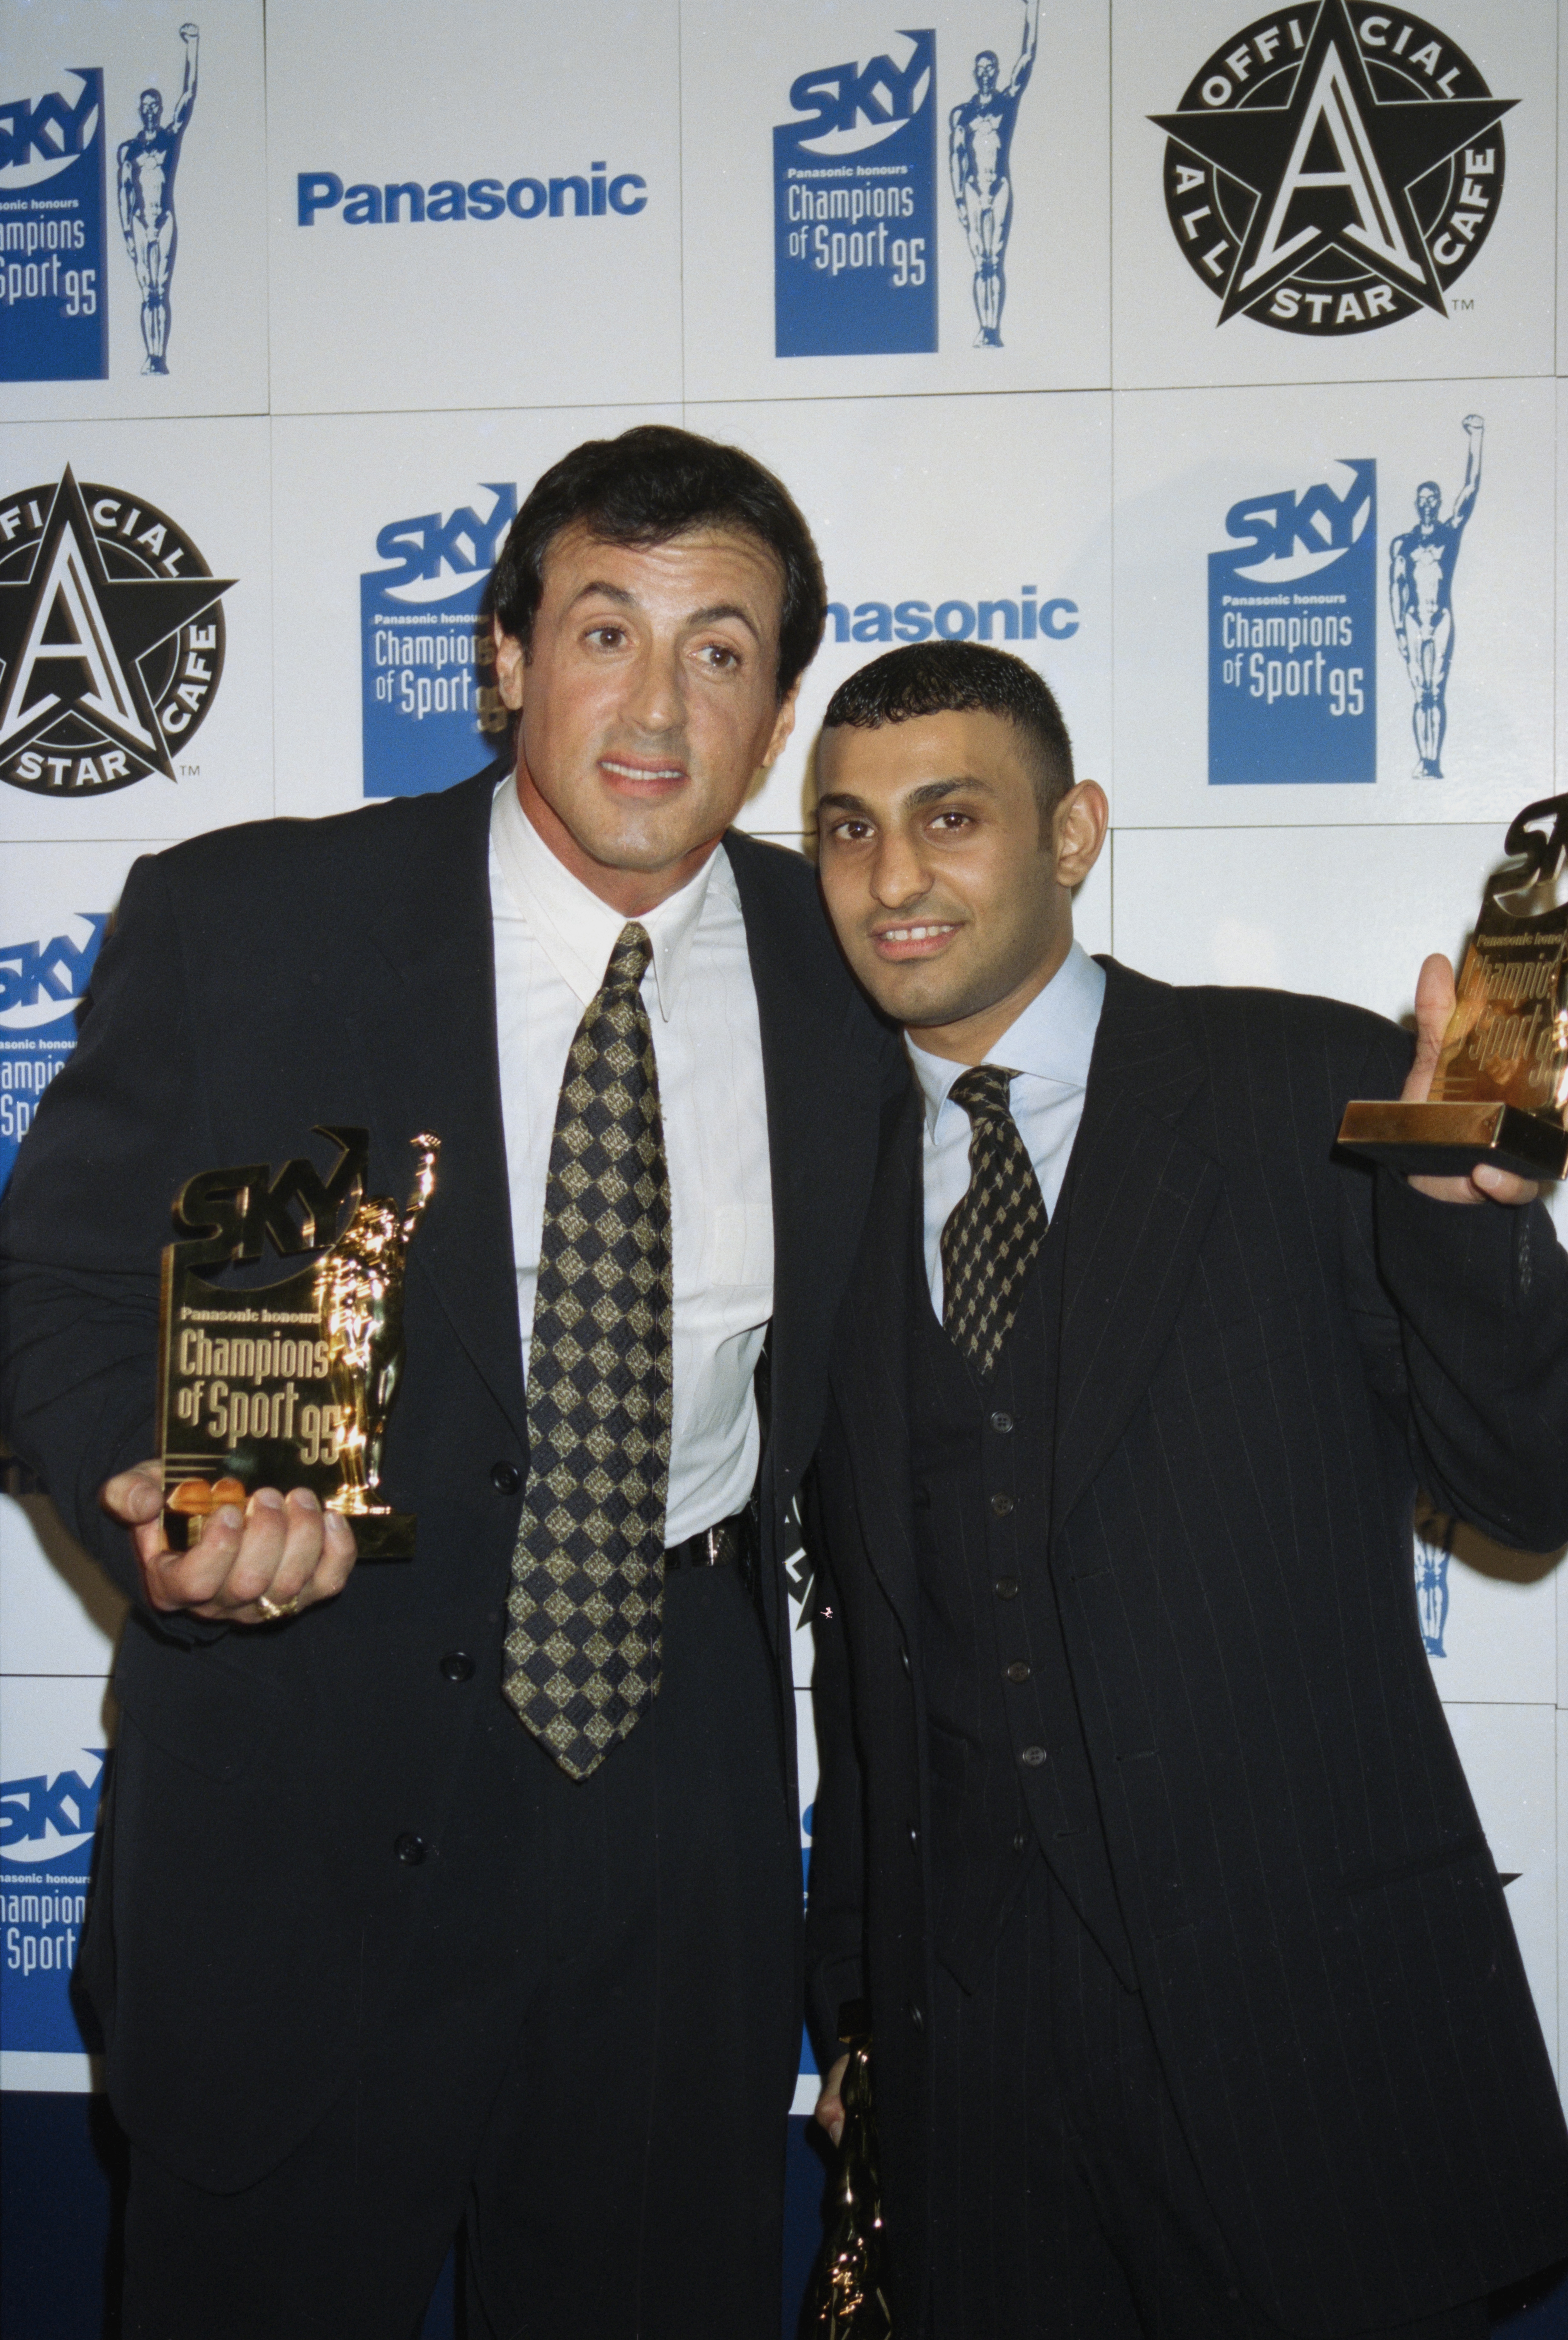 Sylvester Stallone et Naseem Hamed lors de l'événement Sky Champions of Sport le 1er janvier 1996 à Londres, en Angleterre. | Source : Getty Images